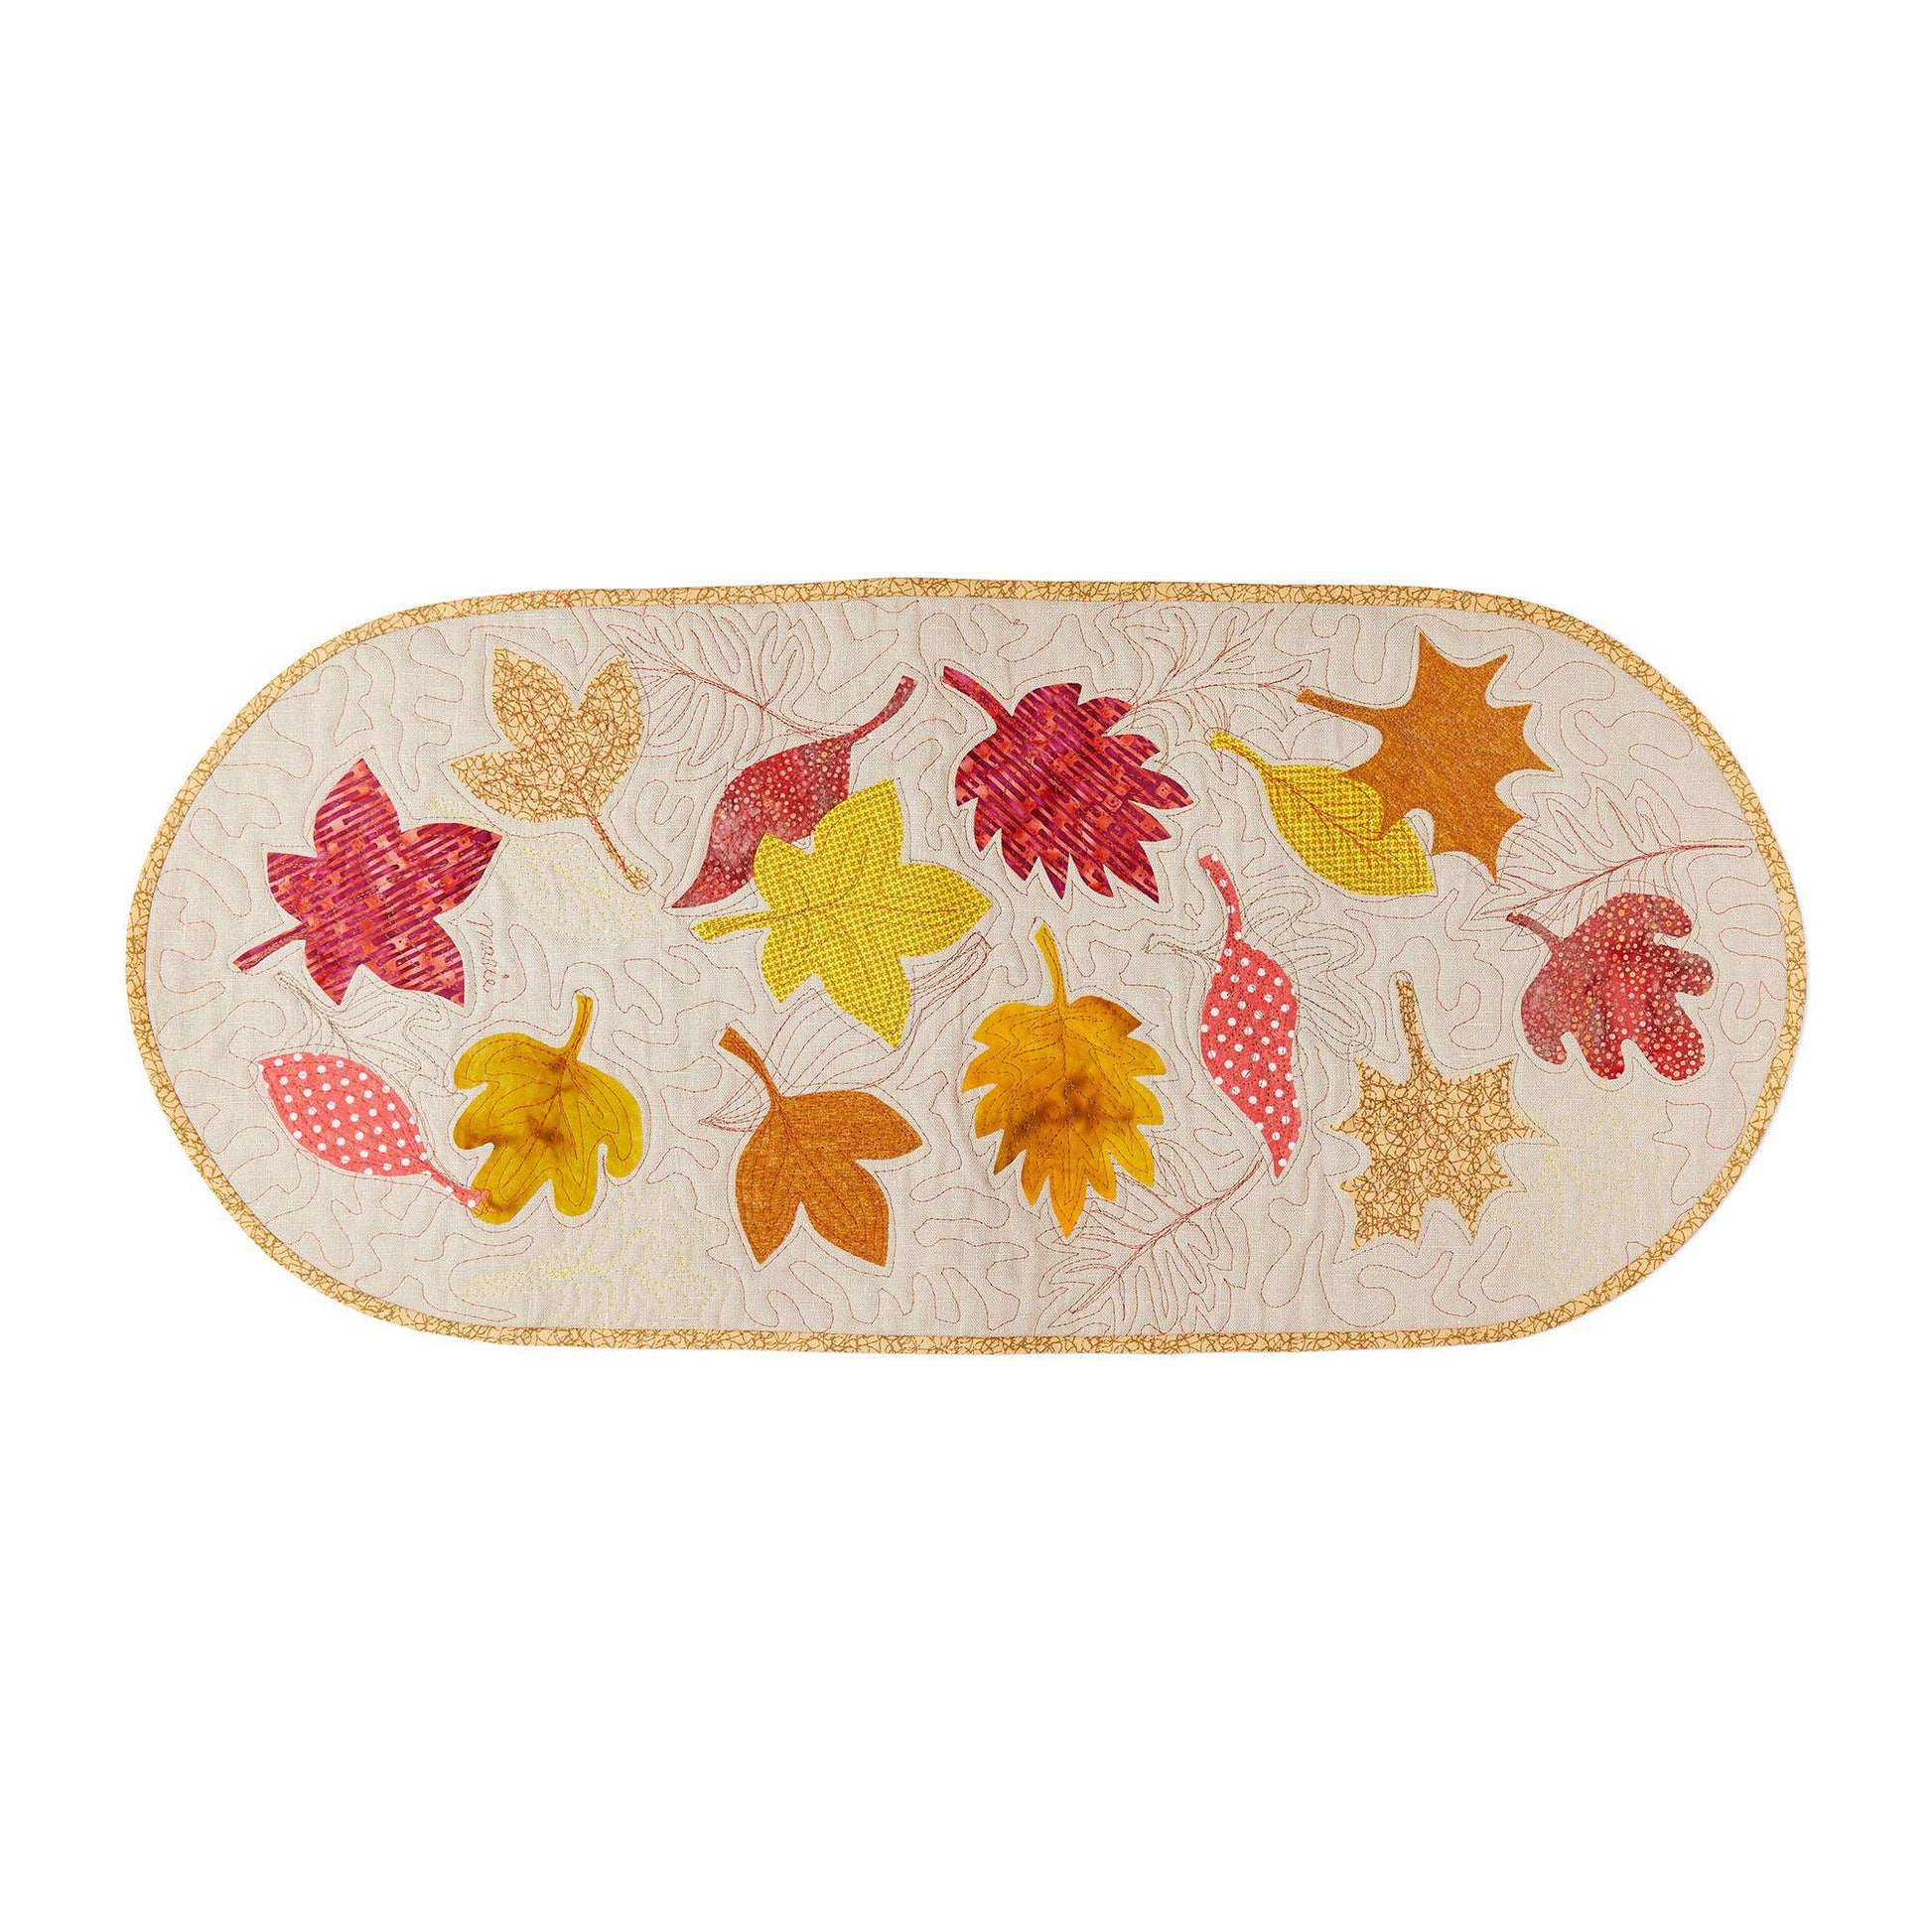 Coats & Clark Autumn Leaf Table Runner Single Size